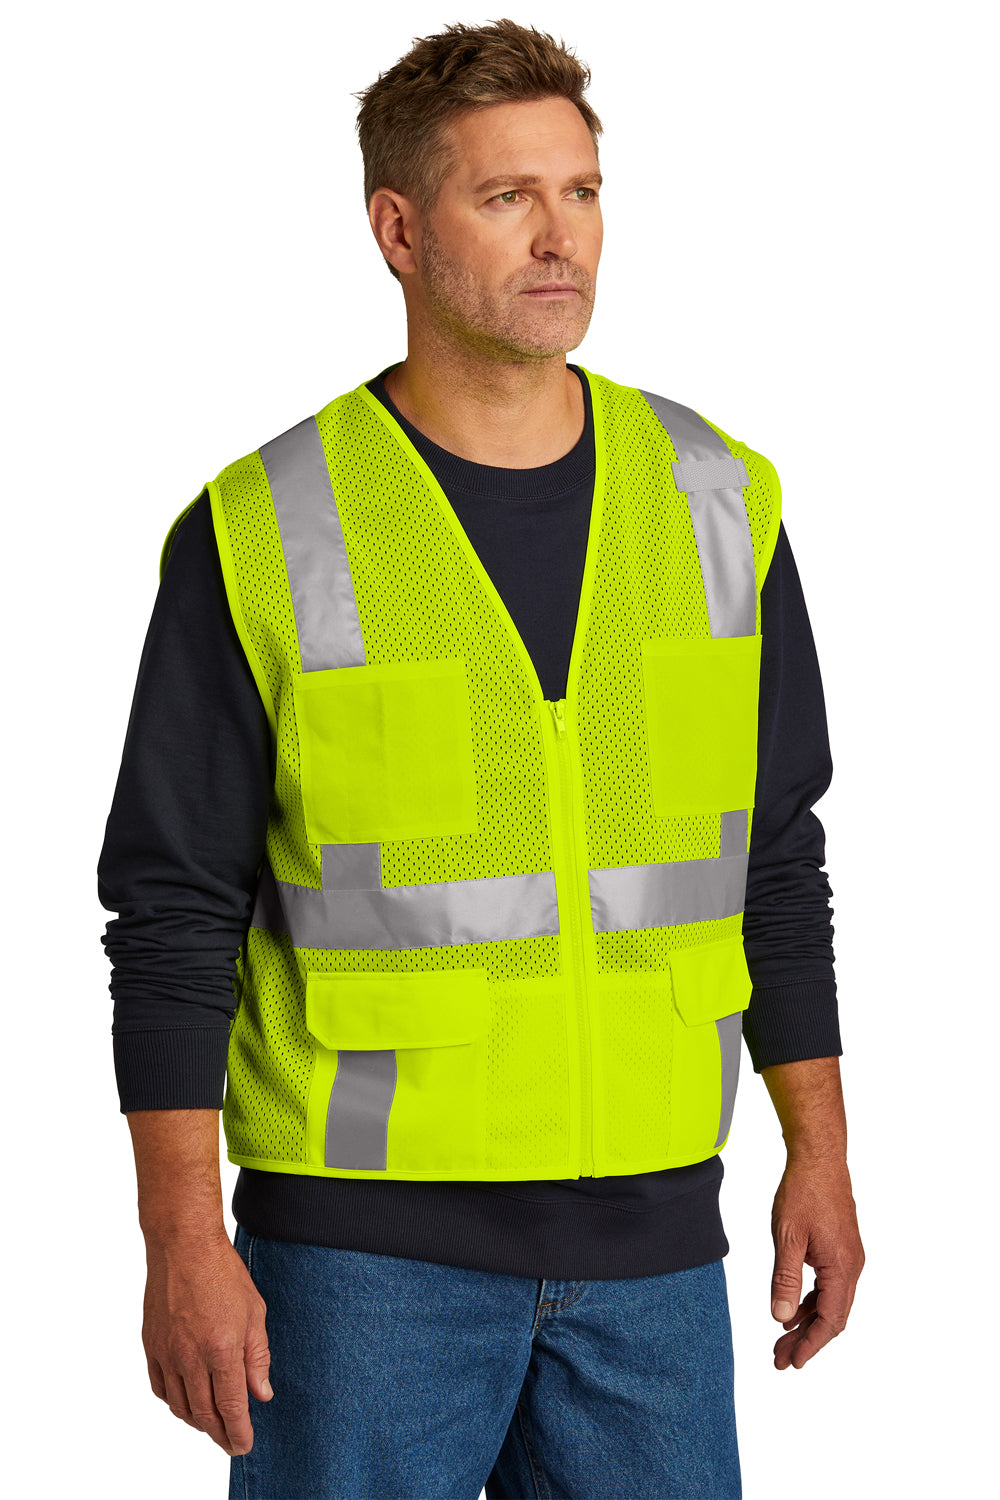 CornerStone CSV104 Mens ANSI 107 Class 2 Mesh Zipper Vest w/ Pocket Safety Yellow 3Q